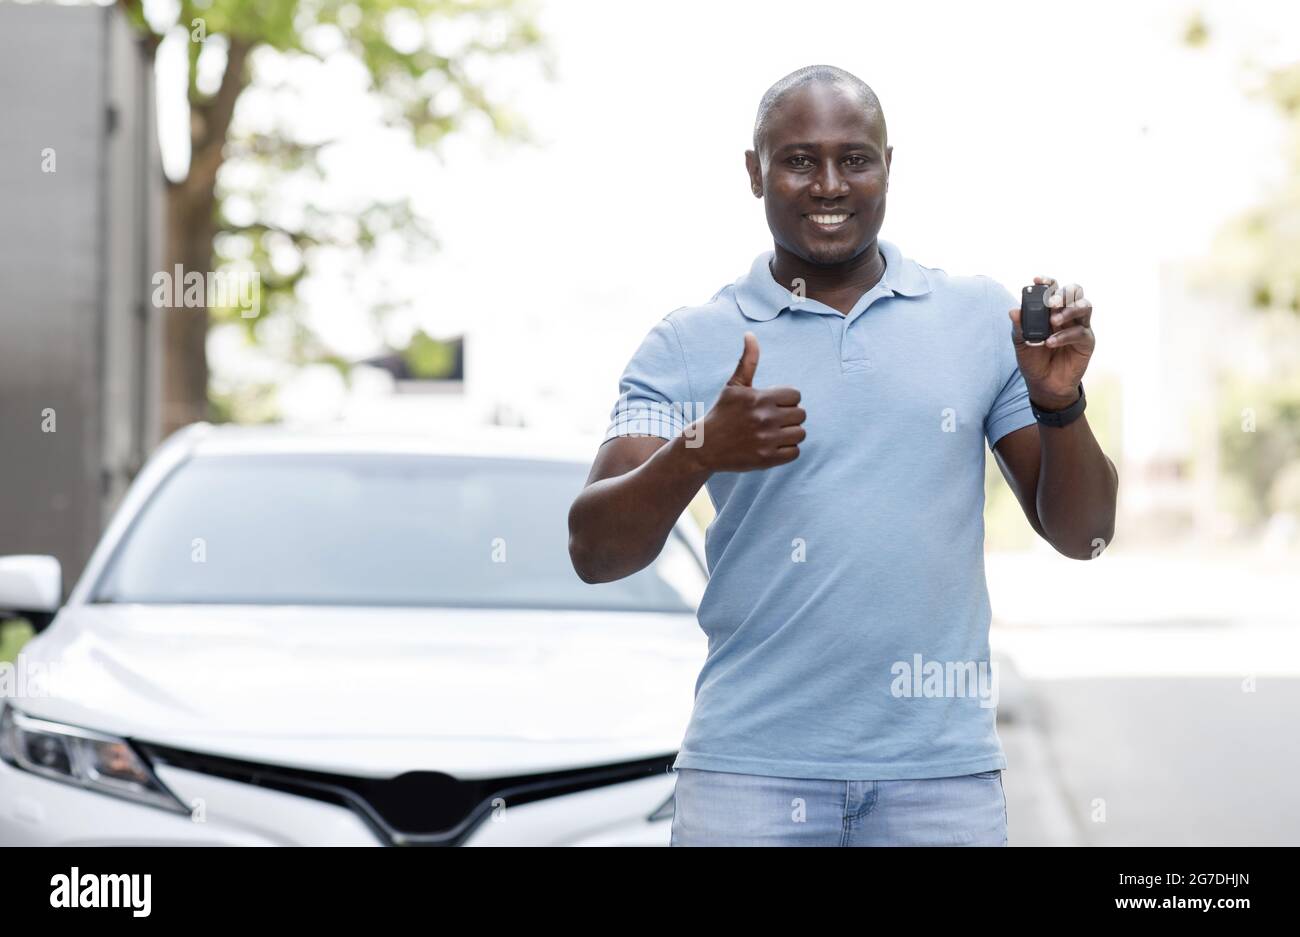 Happy black man showing car key and thumb up Stock Photo - Alamy